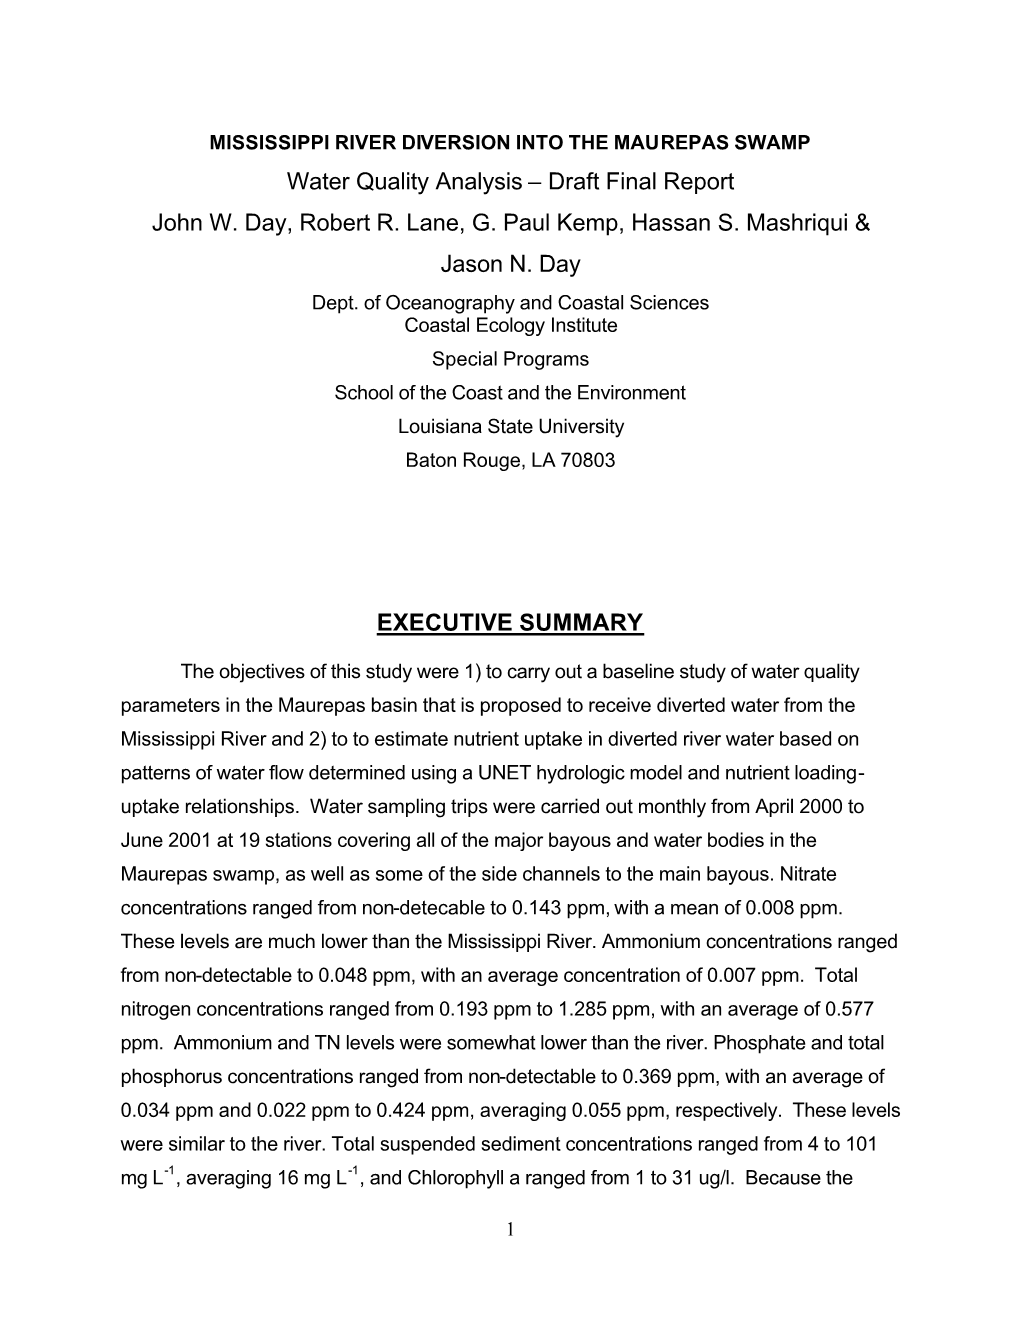 Water Quality Analysis – Draft Final Report John W. Day, Robert R